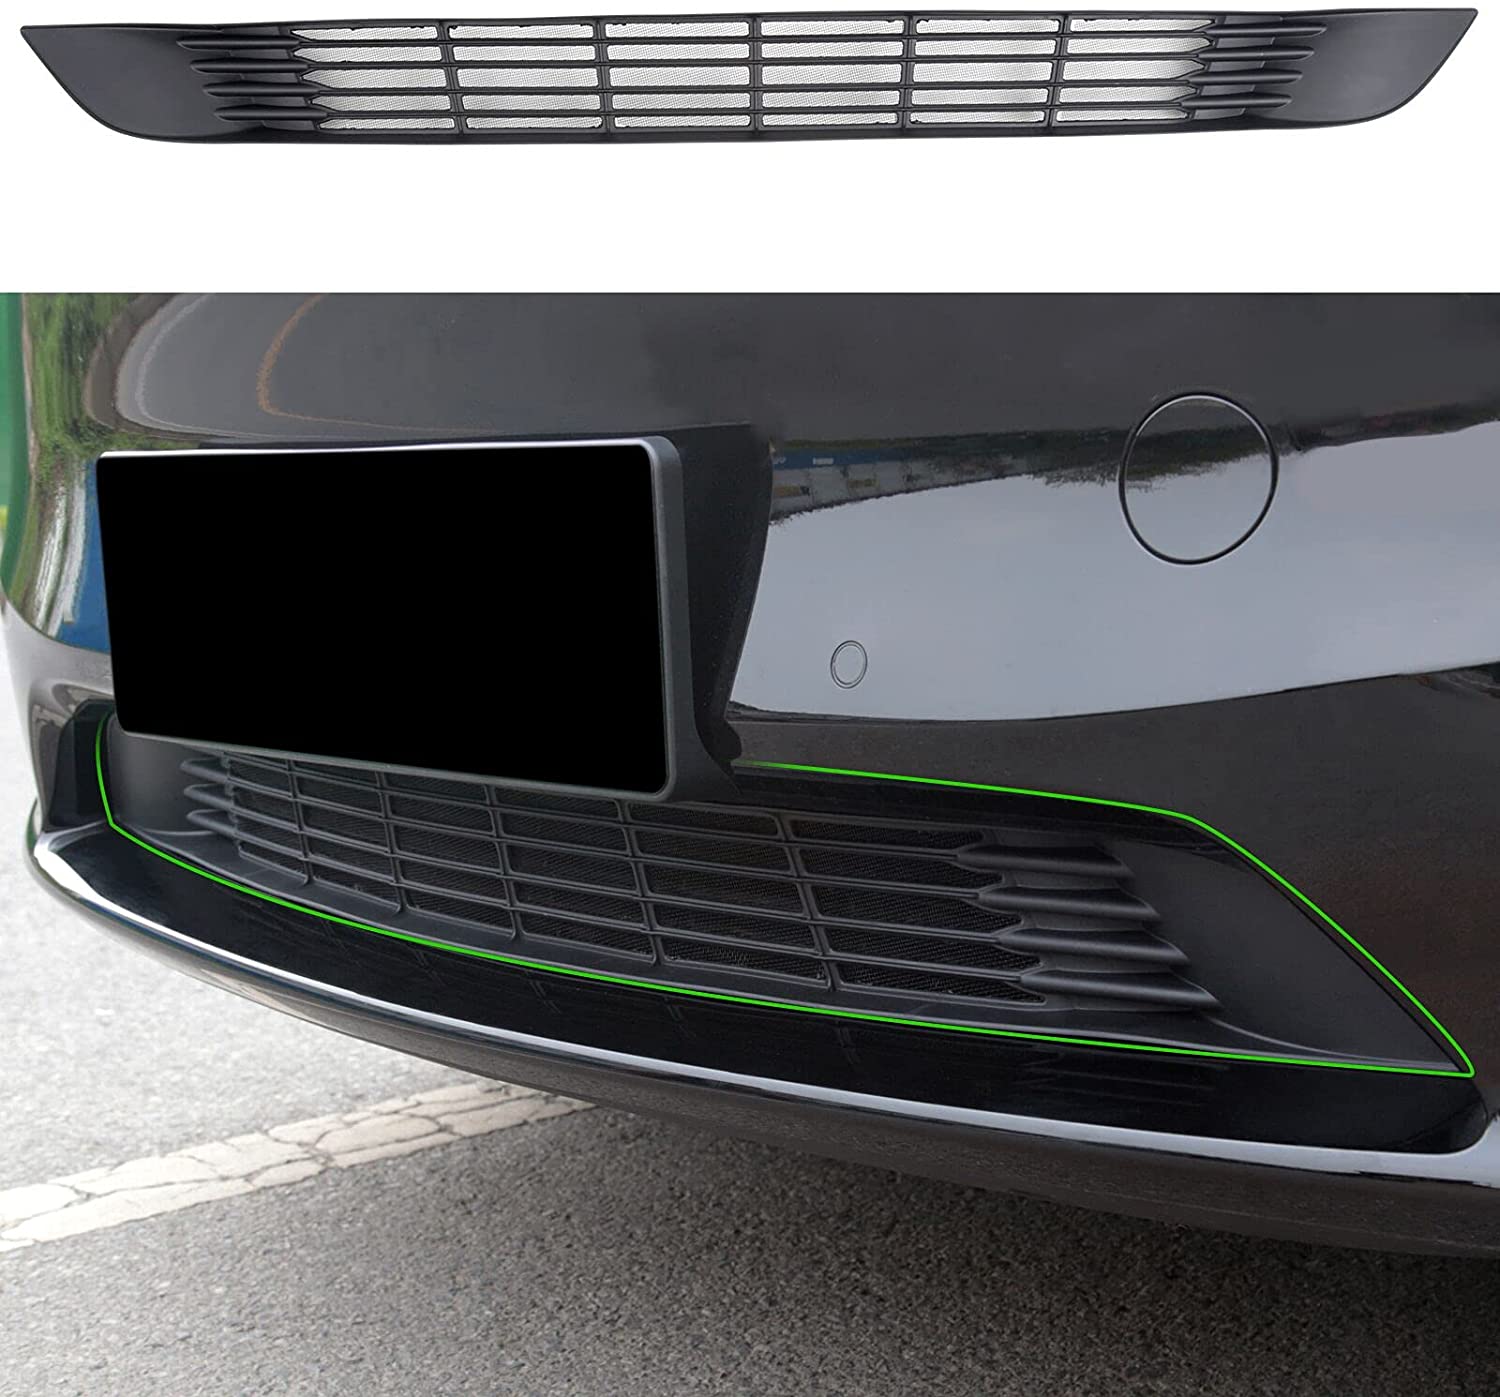 Tesla Model Y ventilation grille for air intake in Frunk - 2-piece